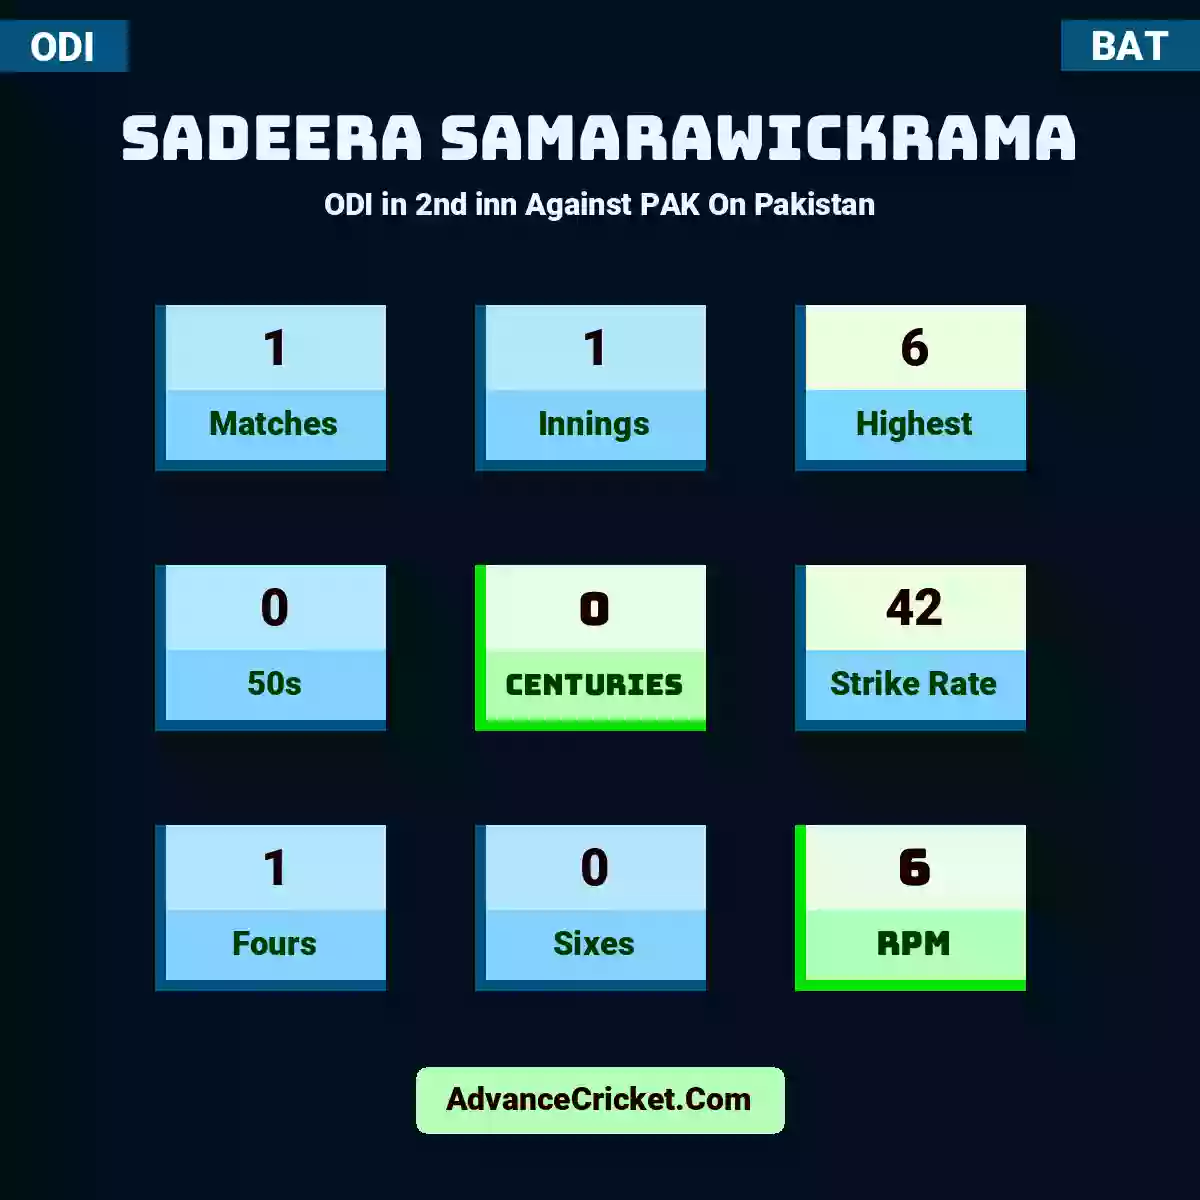 Sadeera Samarawickrama ODI  in 2nd inn Against PAK On Pakistan, Sadeera Samarawickrama played 1 matches, scored 6 runs as highest, 0 half-centuries, and 0 centuries, with a strike rate of 42. S.Samarawickrama hit 1 fours and 0 sixes, with an RPM of 6.